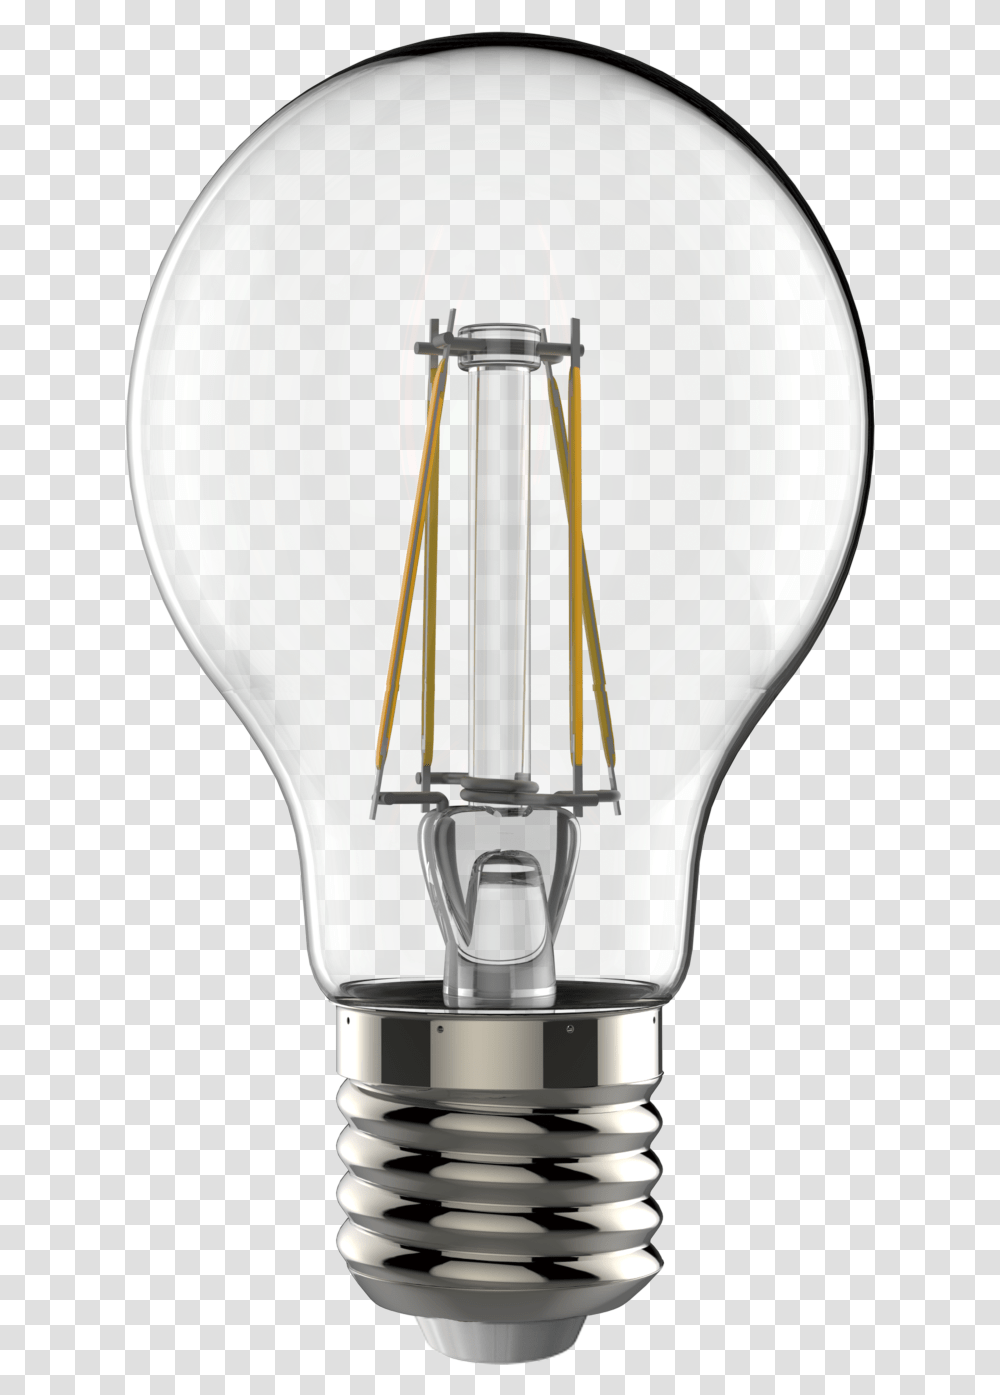 Incandescent Light Bulb Led Lamp Edison Background Bulb Light, Mixer, Appliance, Lightbulb Transparent Png